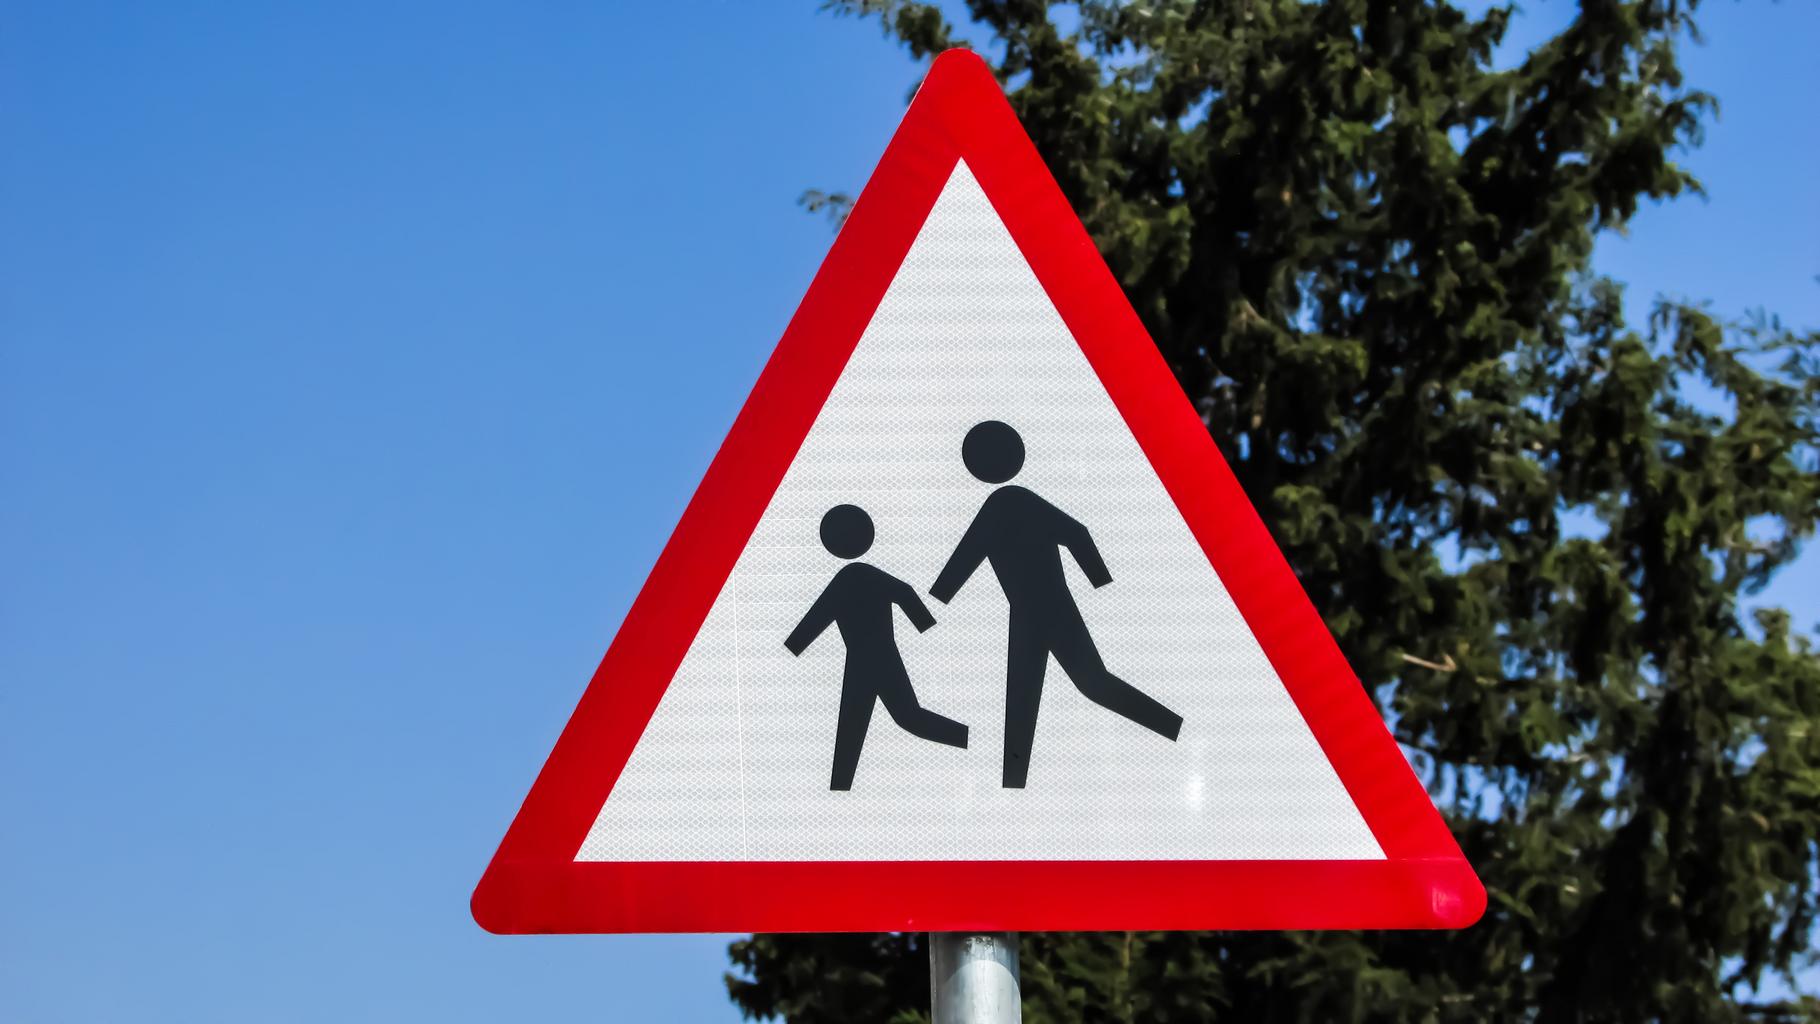 Warning school children crossing